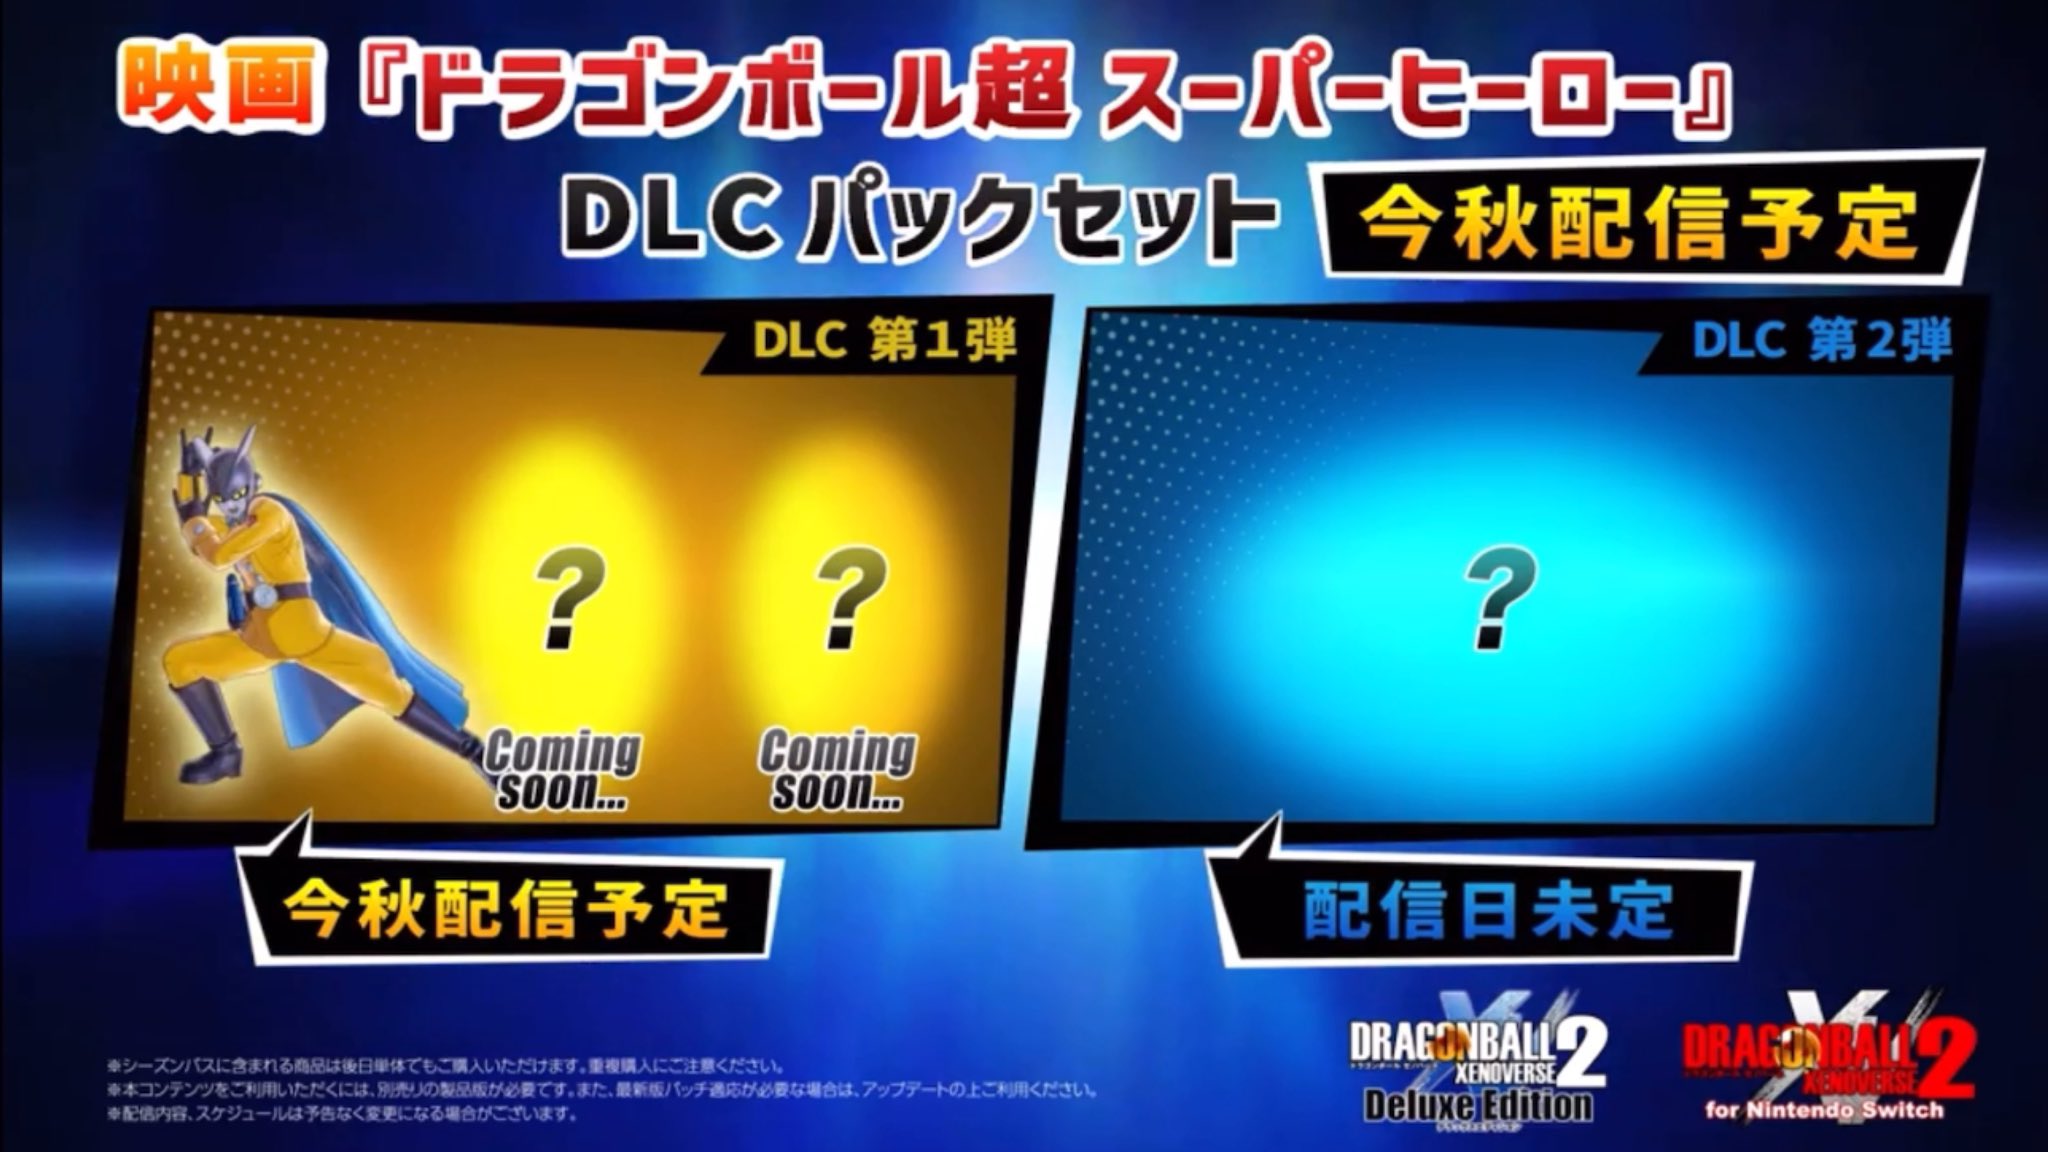 Dragon Ball Xenoverse 2 - Super Uub announced as next DLC